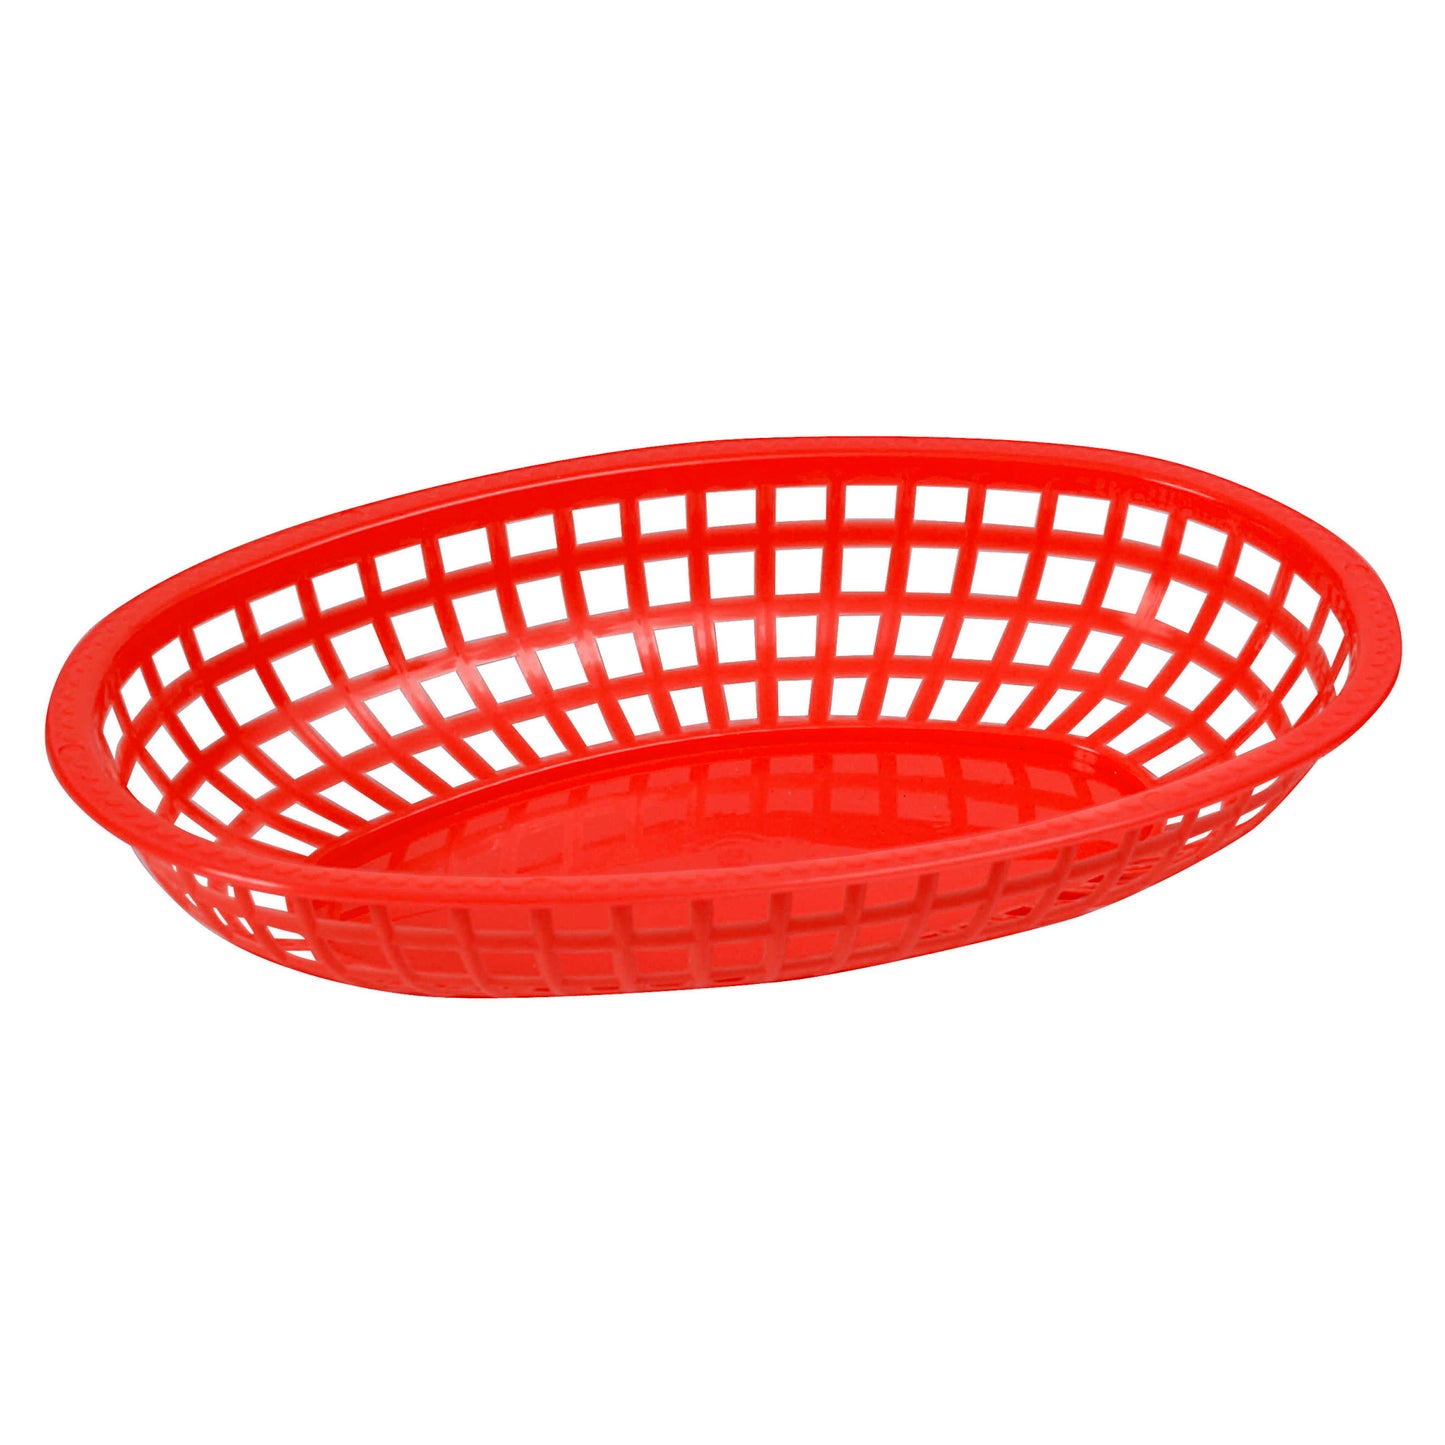 POB-R - Oval Fast Food Basket, 10-1/4" x 6-3/4" x 2" - Red